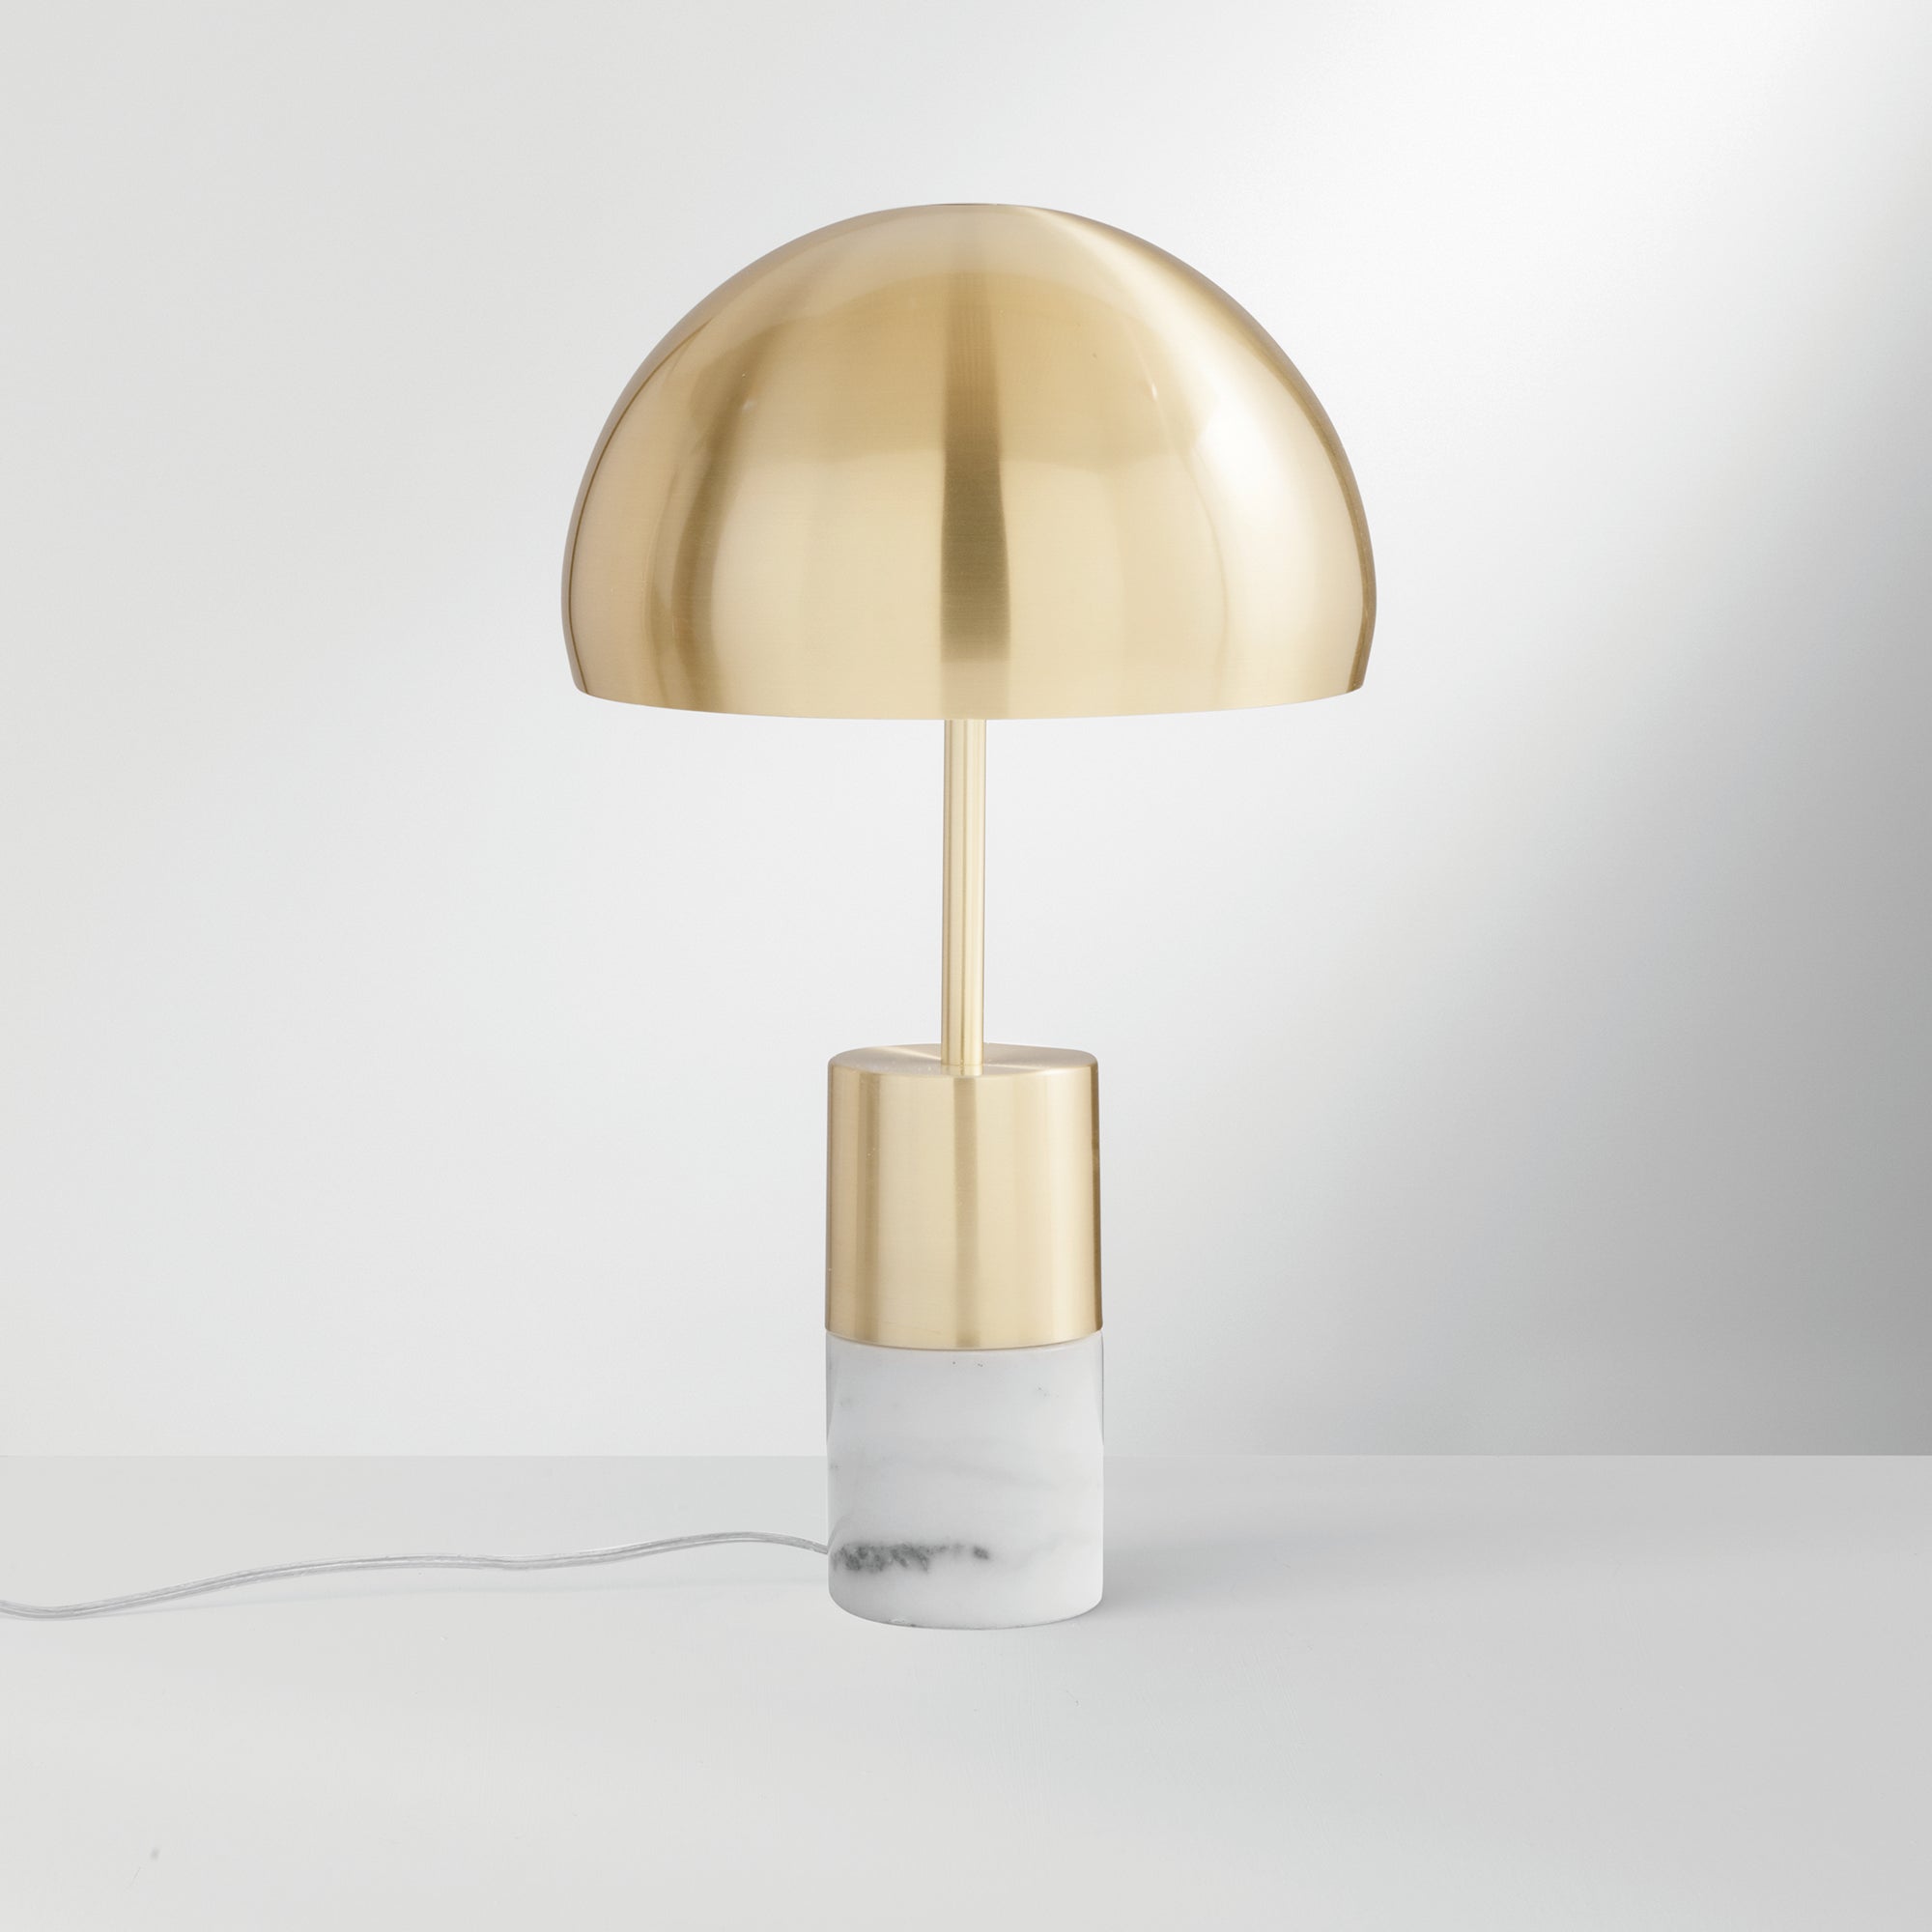 Lampe de table IGEA dorée en métal avec socle en marbre